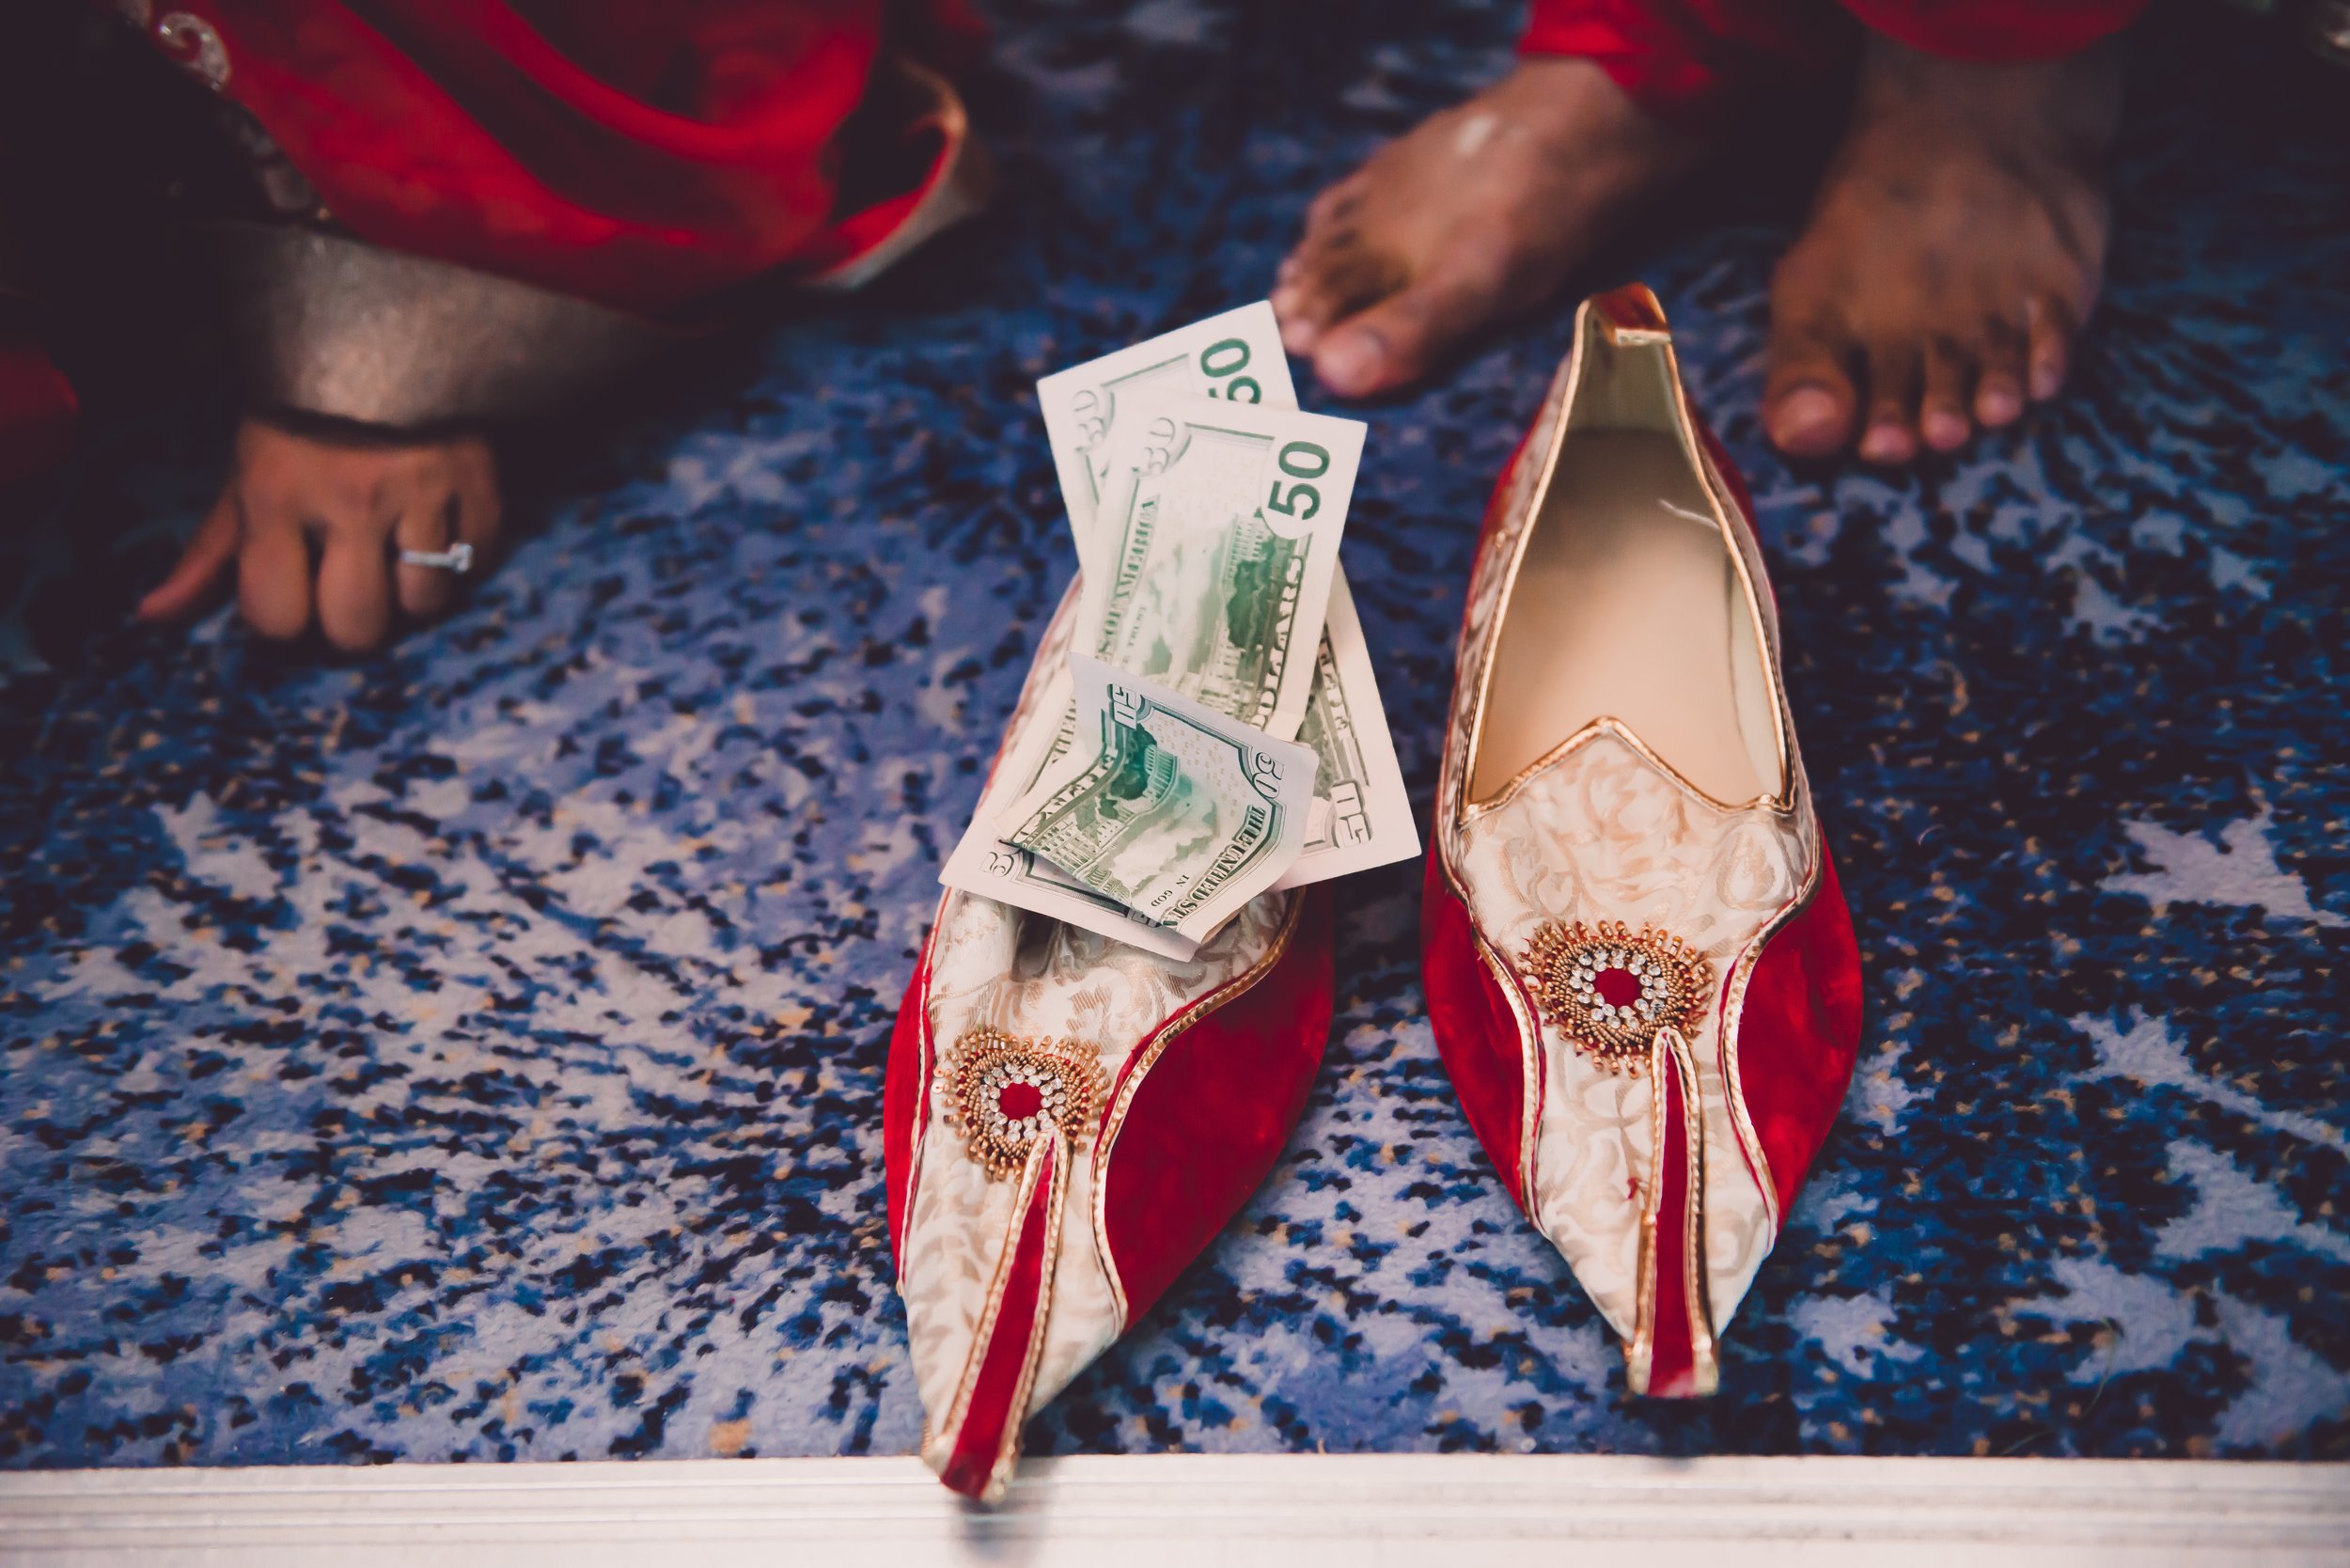  Indian Wedding Groom’s shoes stuffed with money 